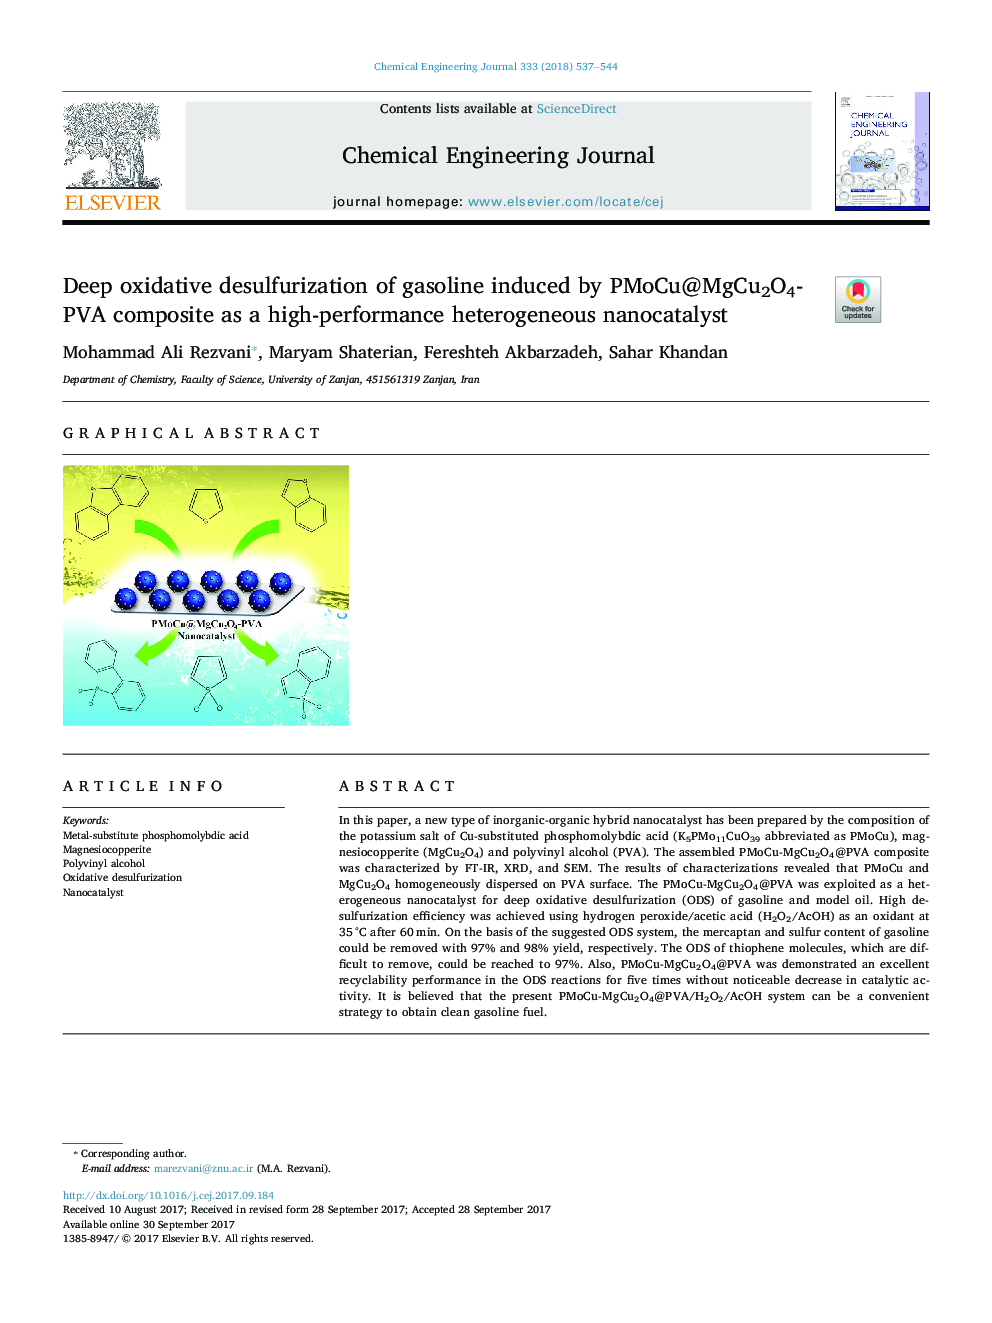 Deep oxidative desulfurization of gasoline induced by PMoCu@MgCu2O4-PVA composite as a high-performance heterogeneous nanocatalyst